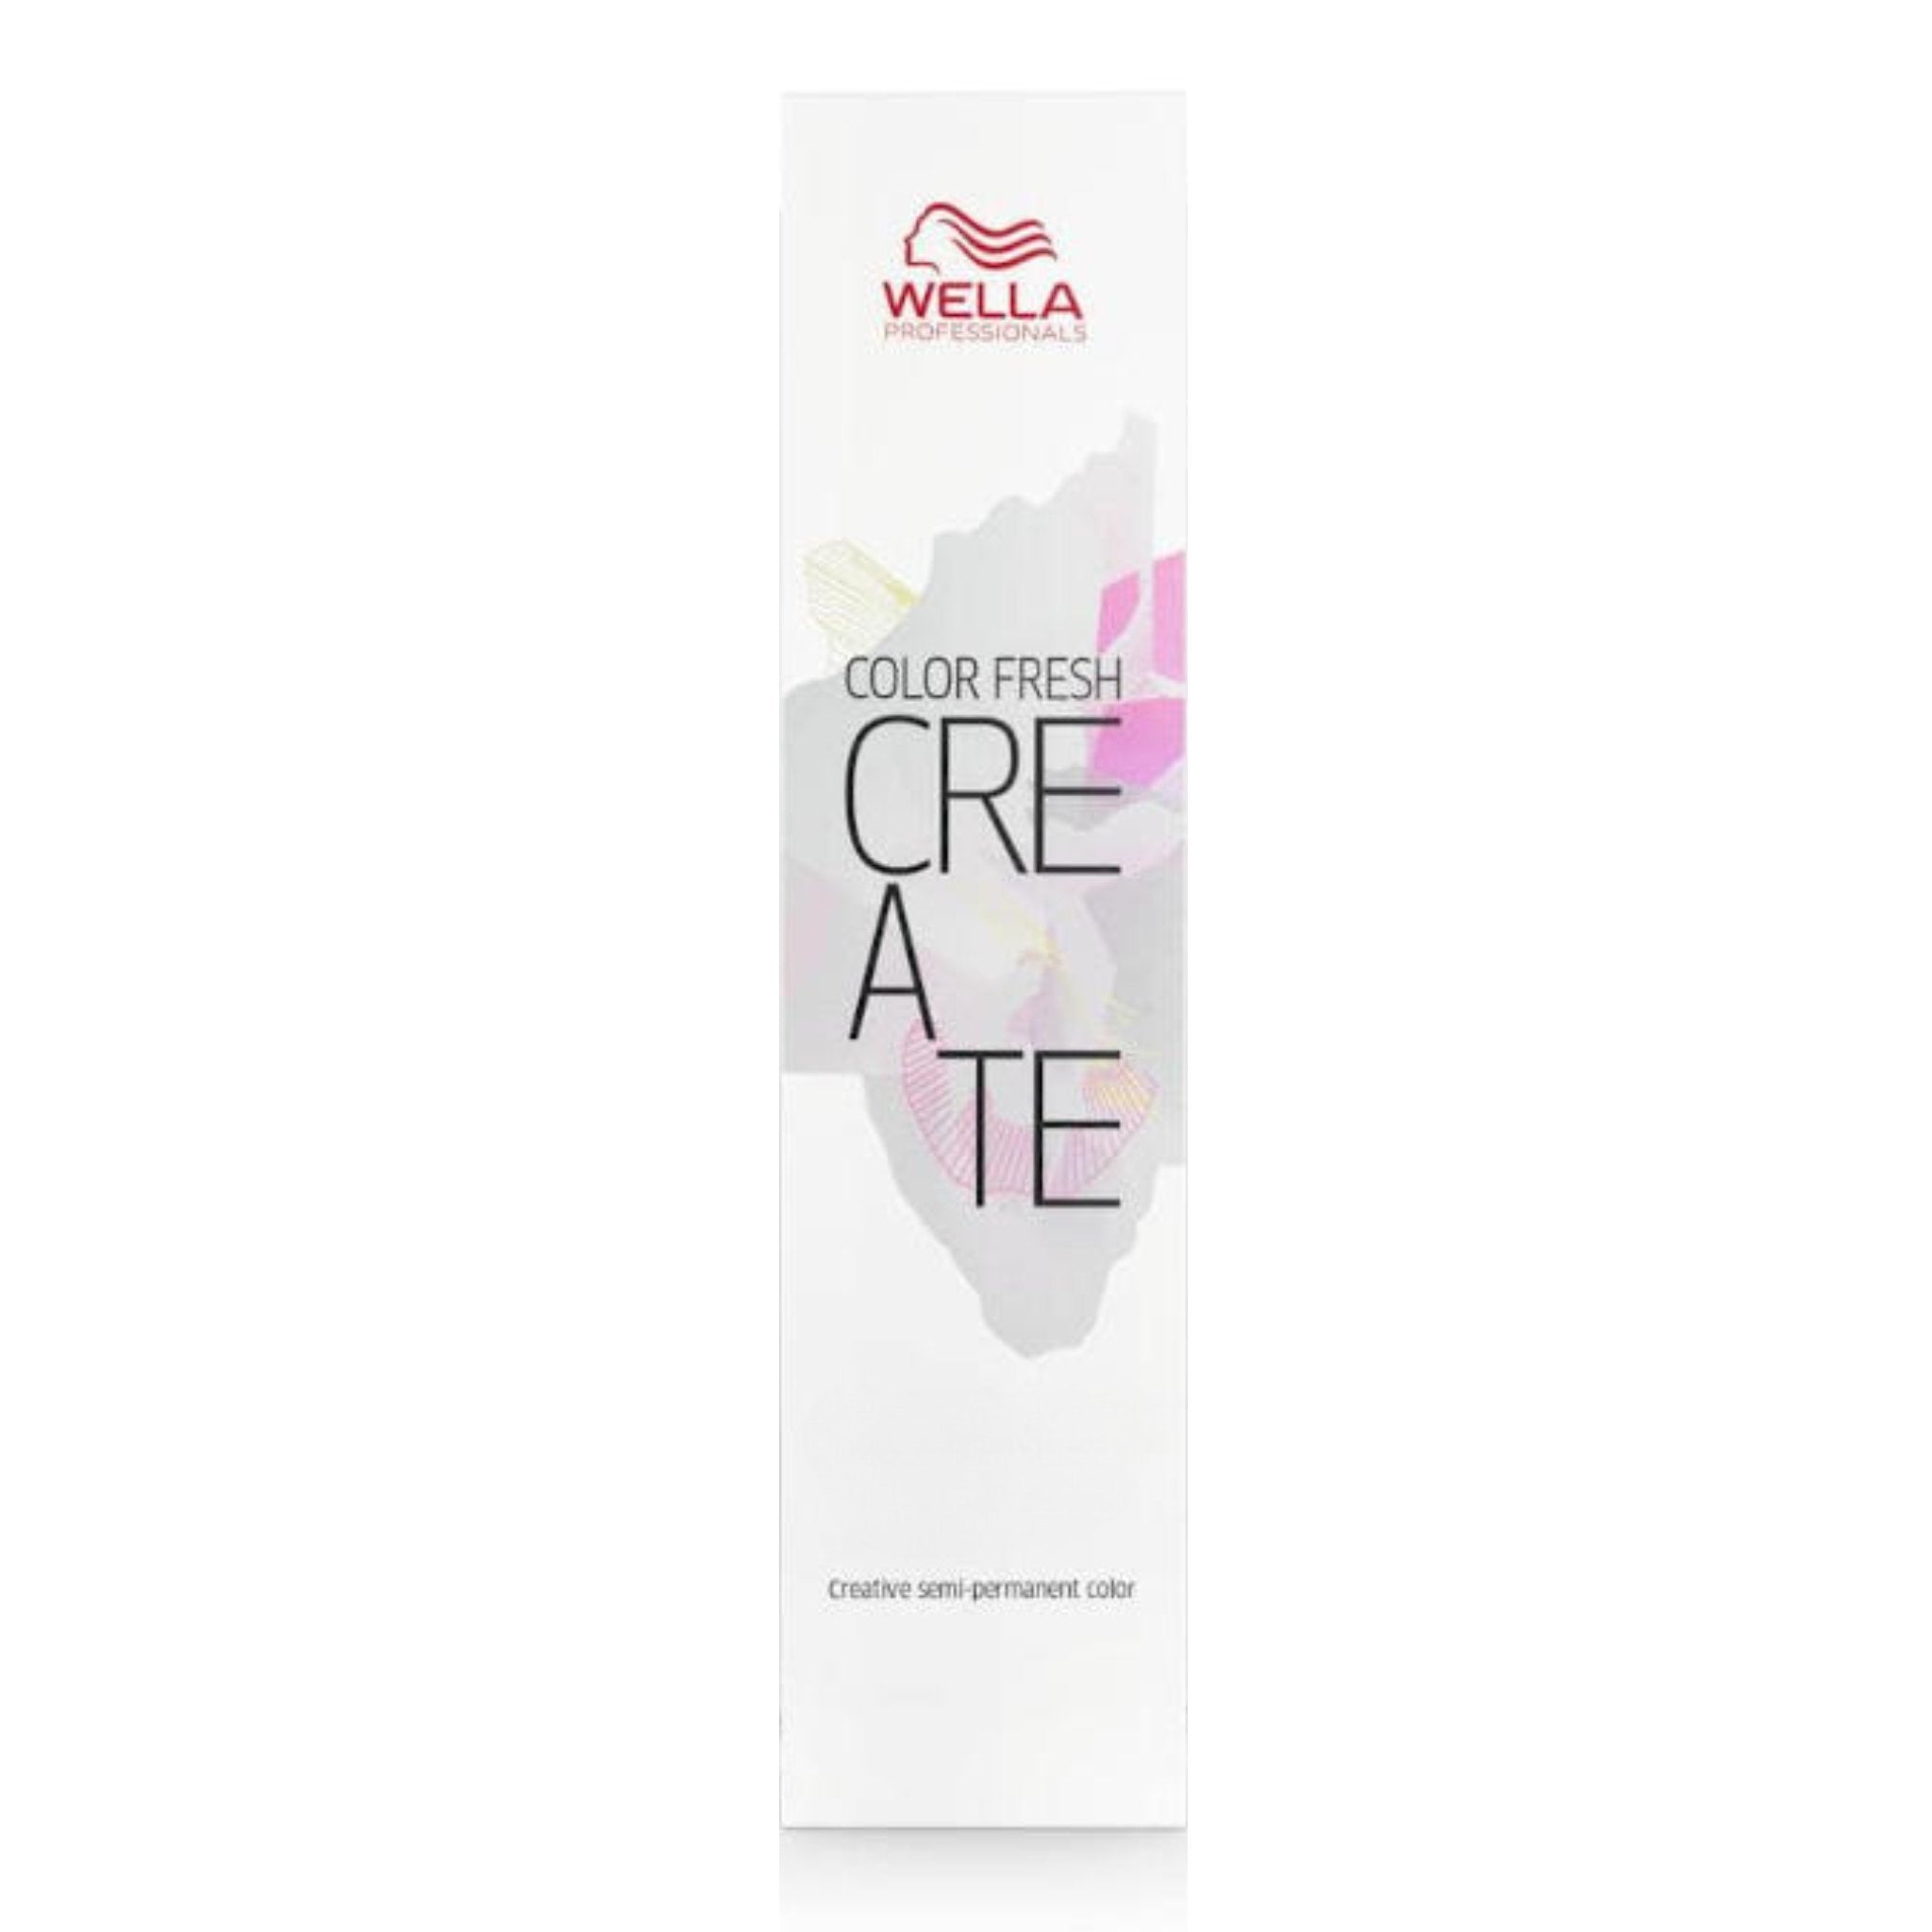 Wella. Color Fresh Create - 57g - Concept C. Shop